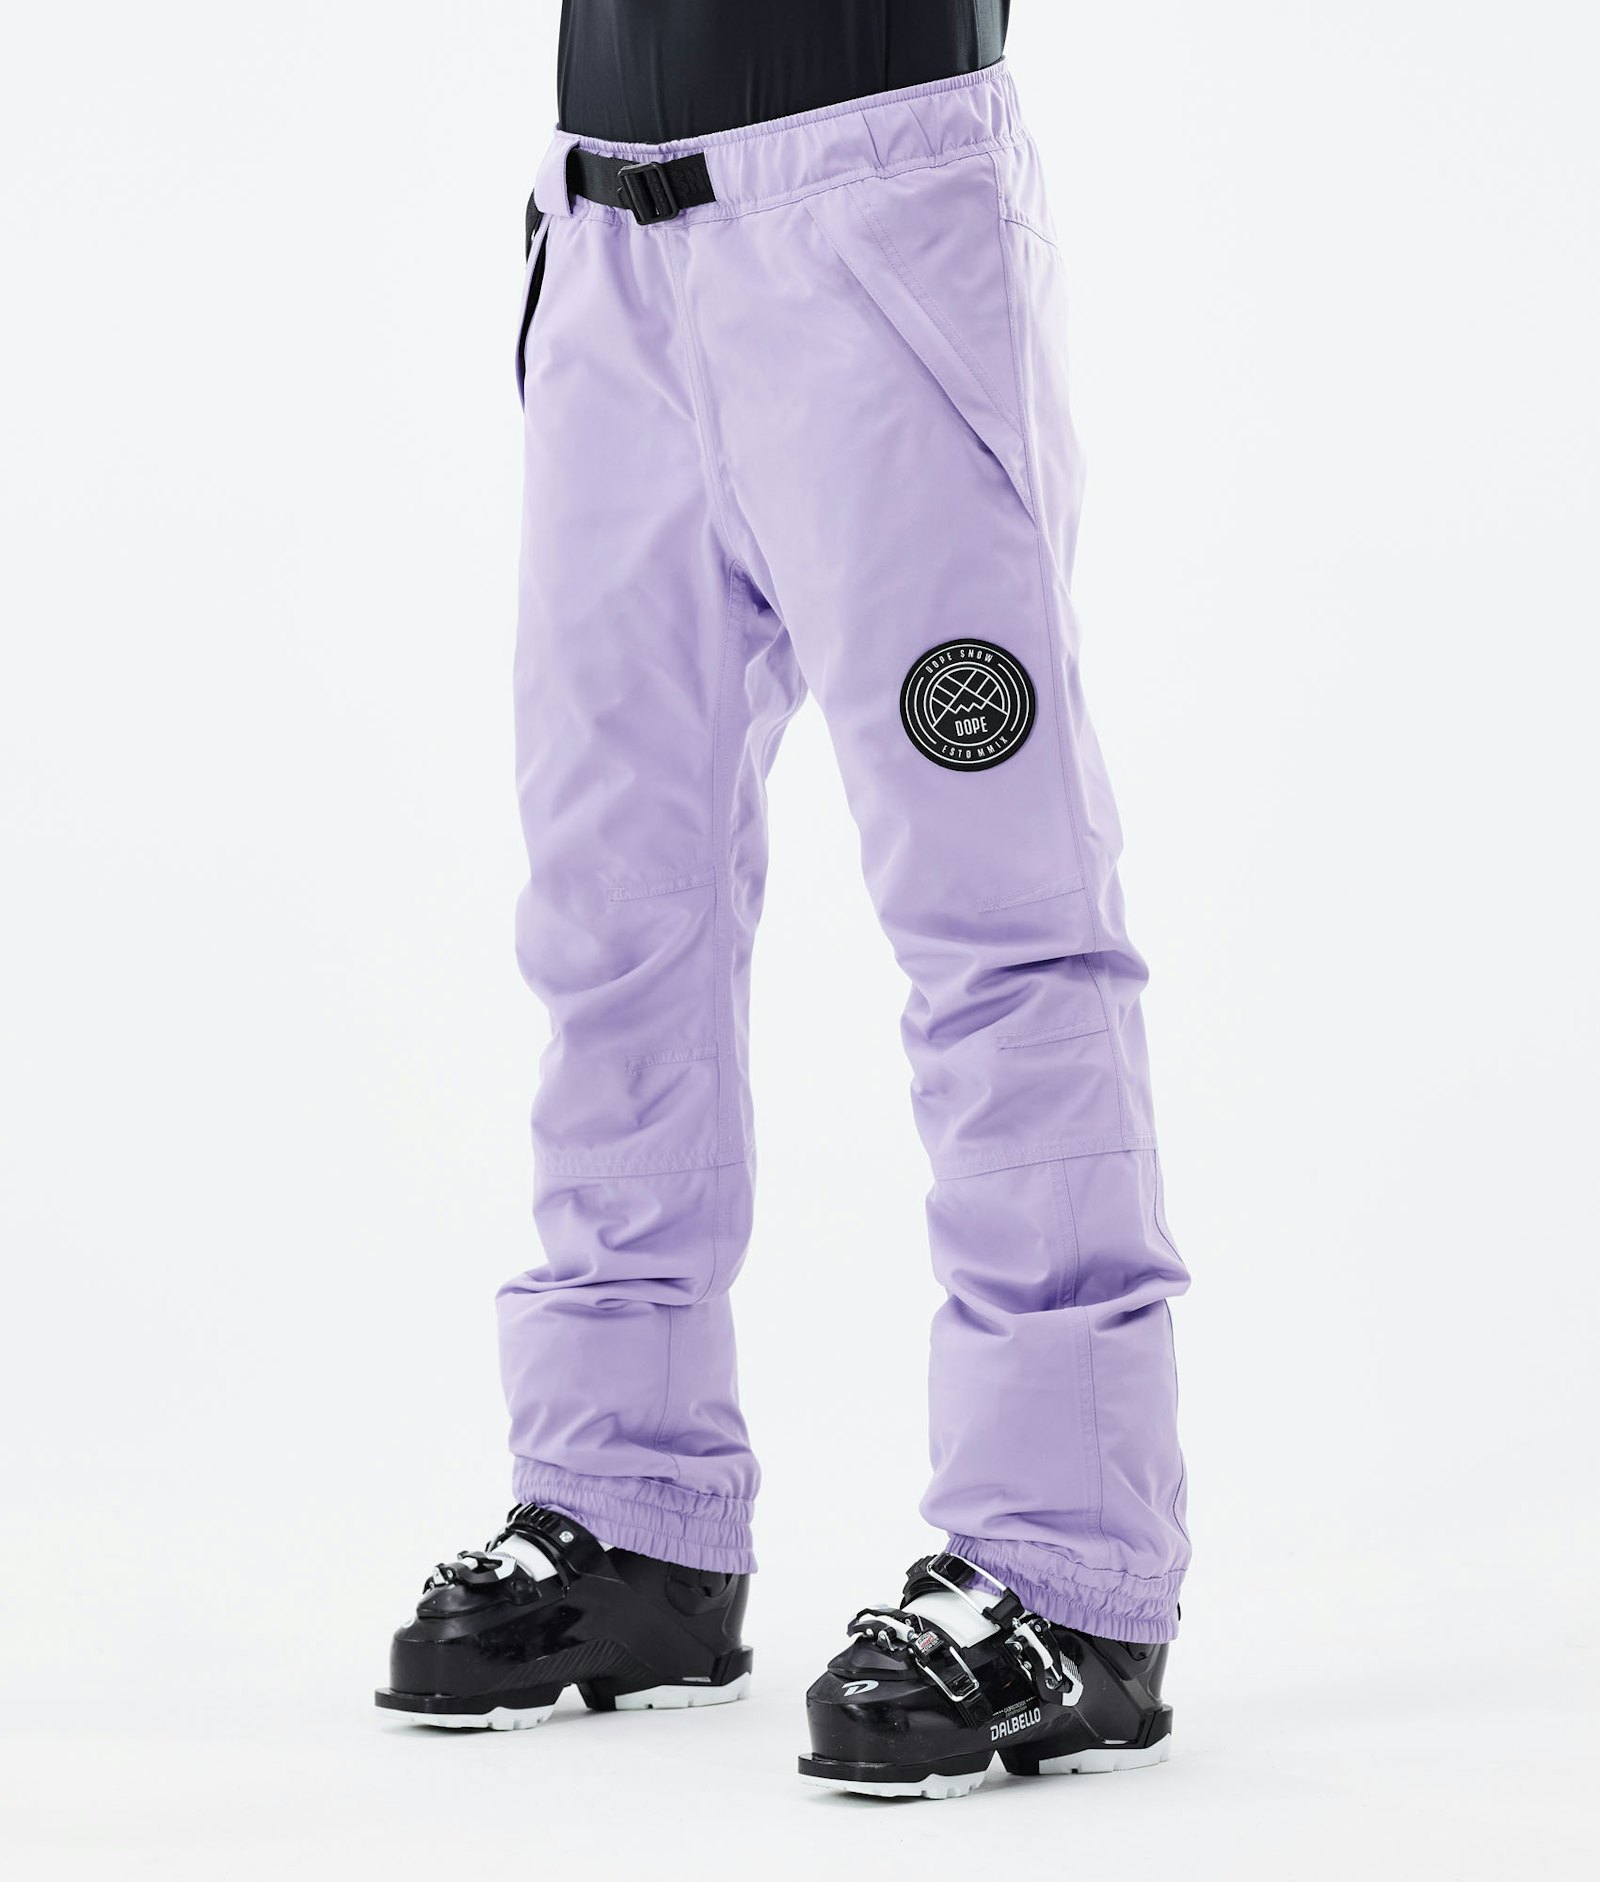 Blizzard W 2021 Ski Pants Women Faded Violet, Image 1 of 4